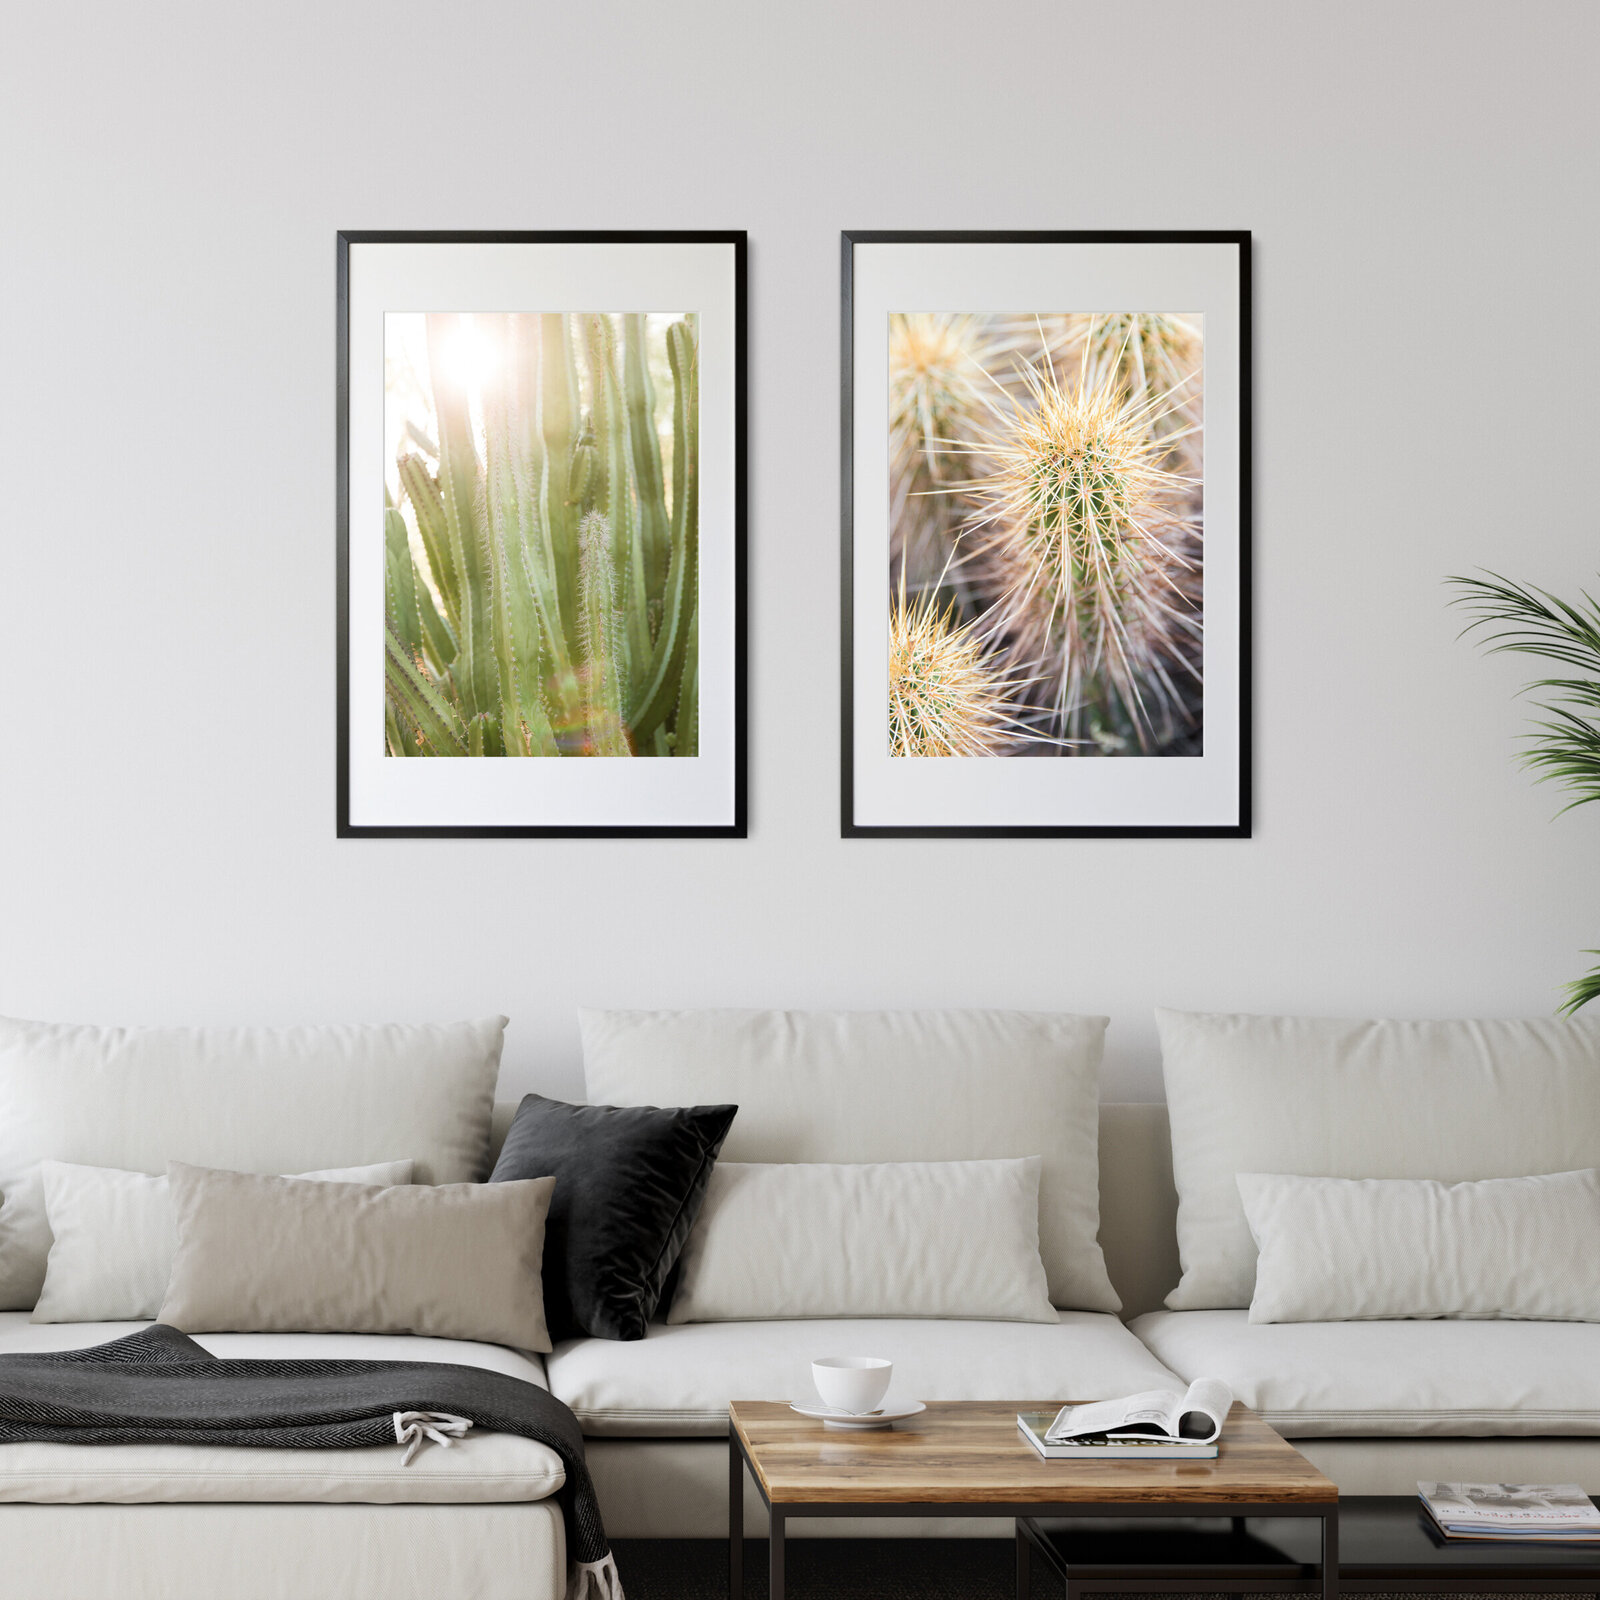 Arizona desert cactus prints in living room